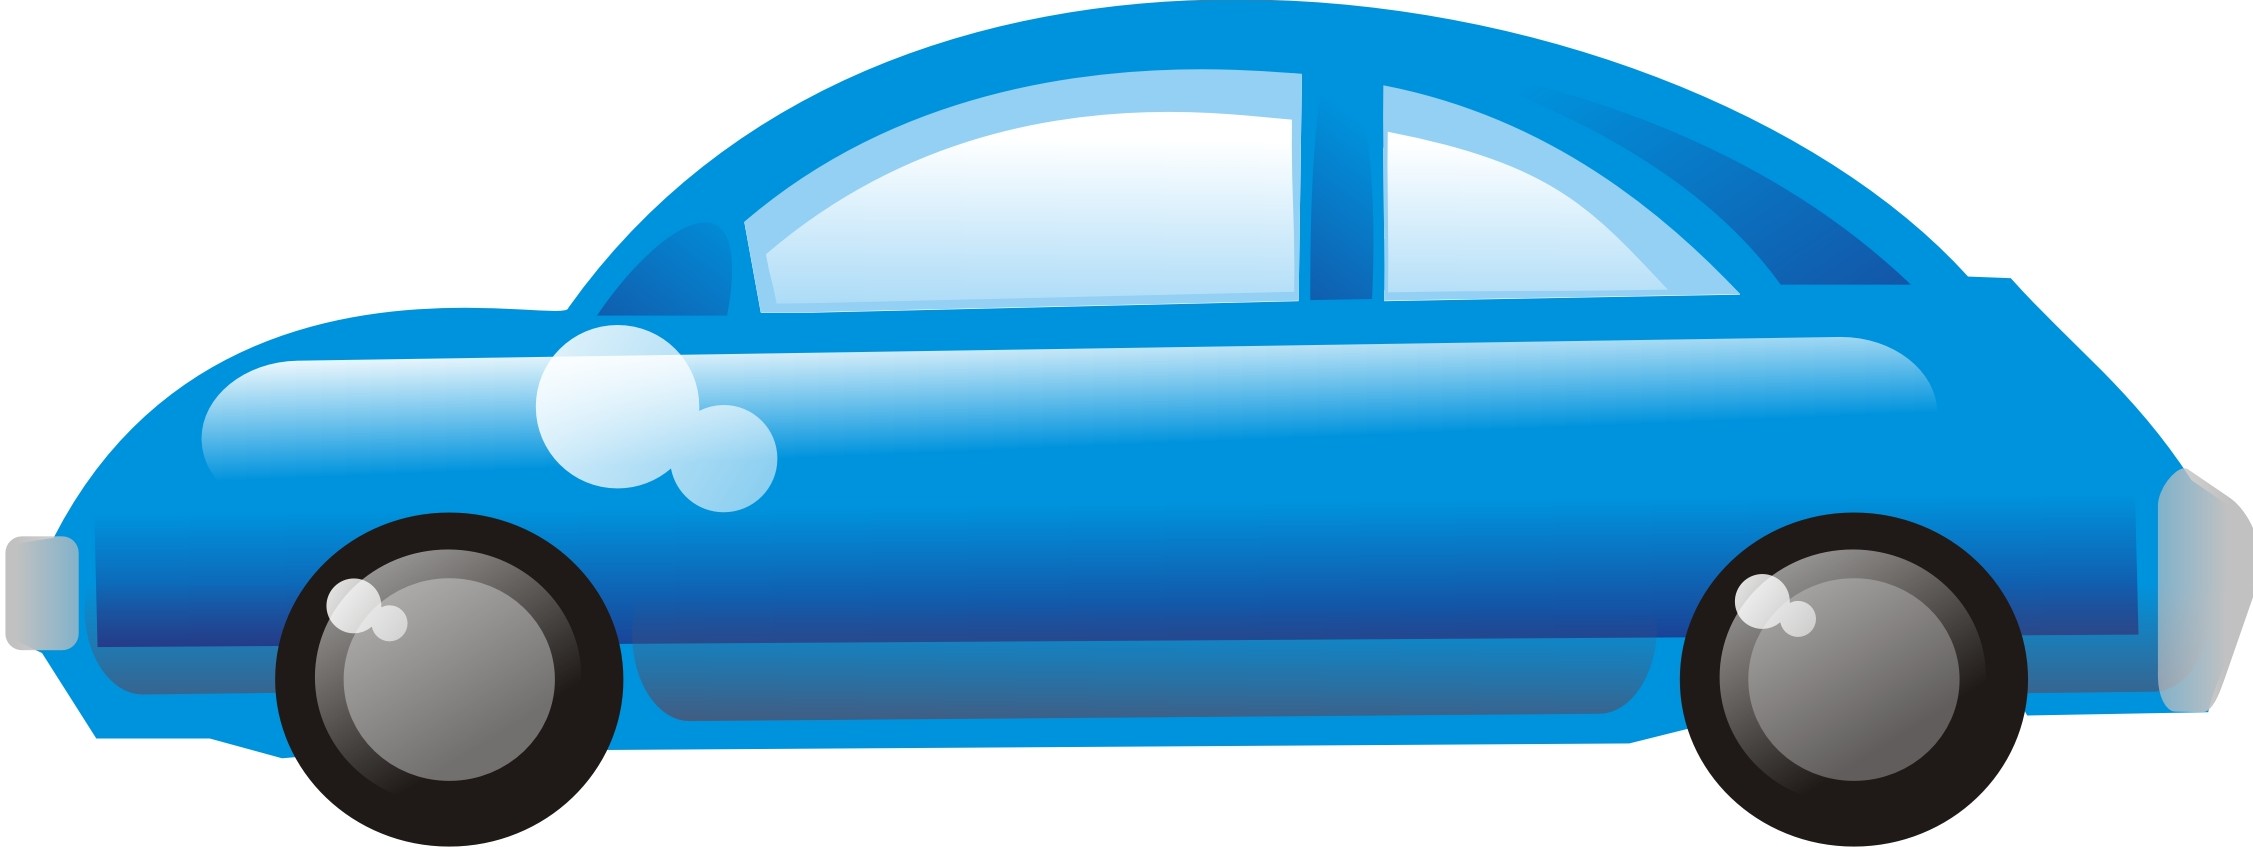 Cars blue car clipart